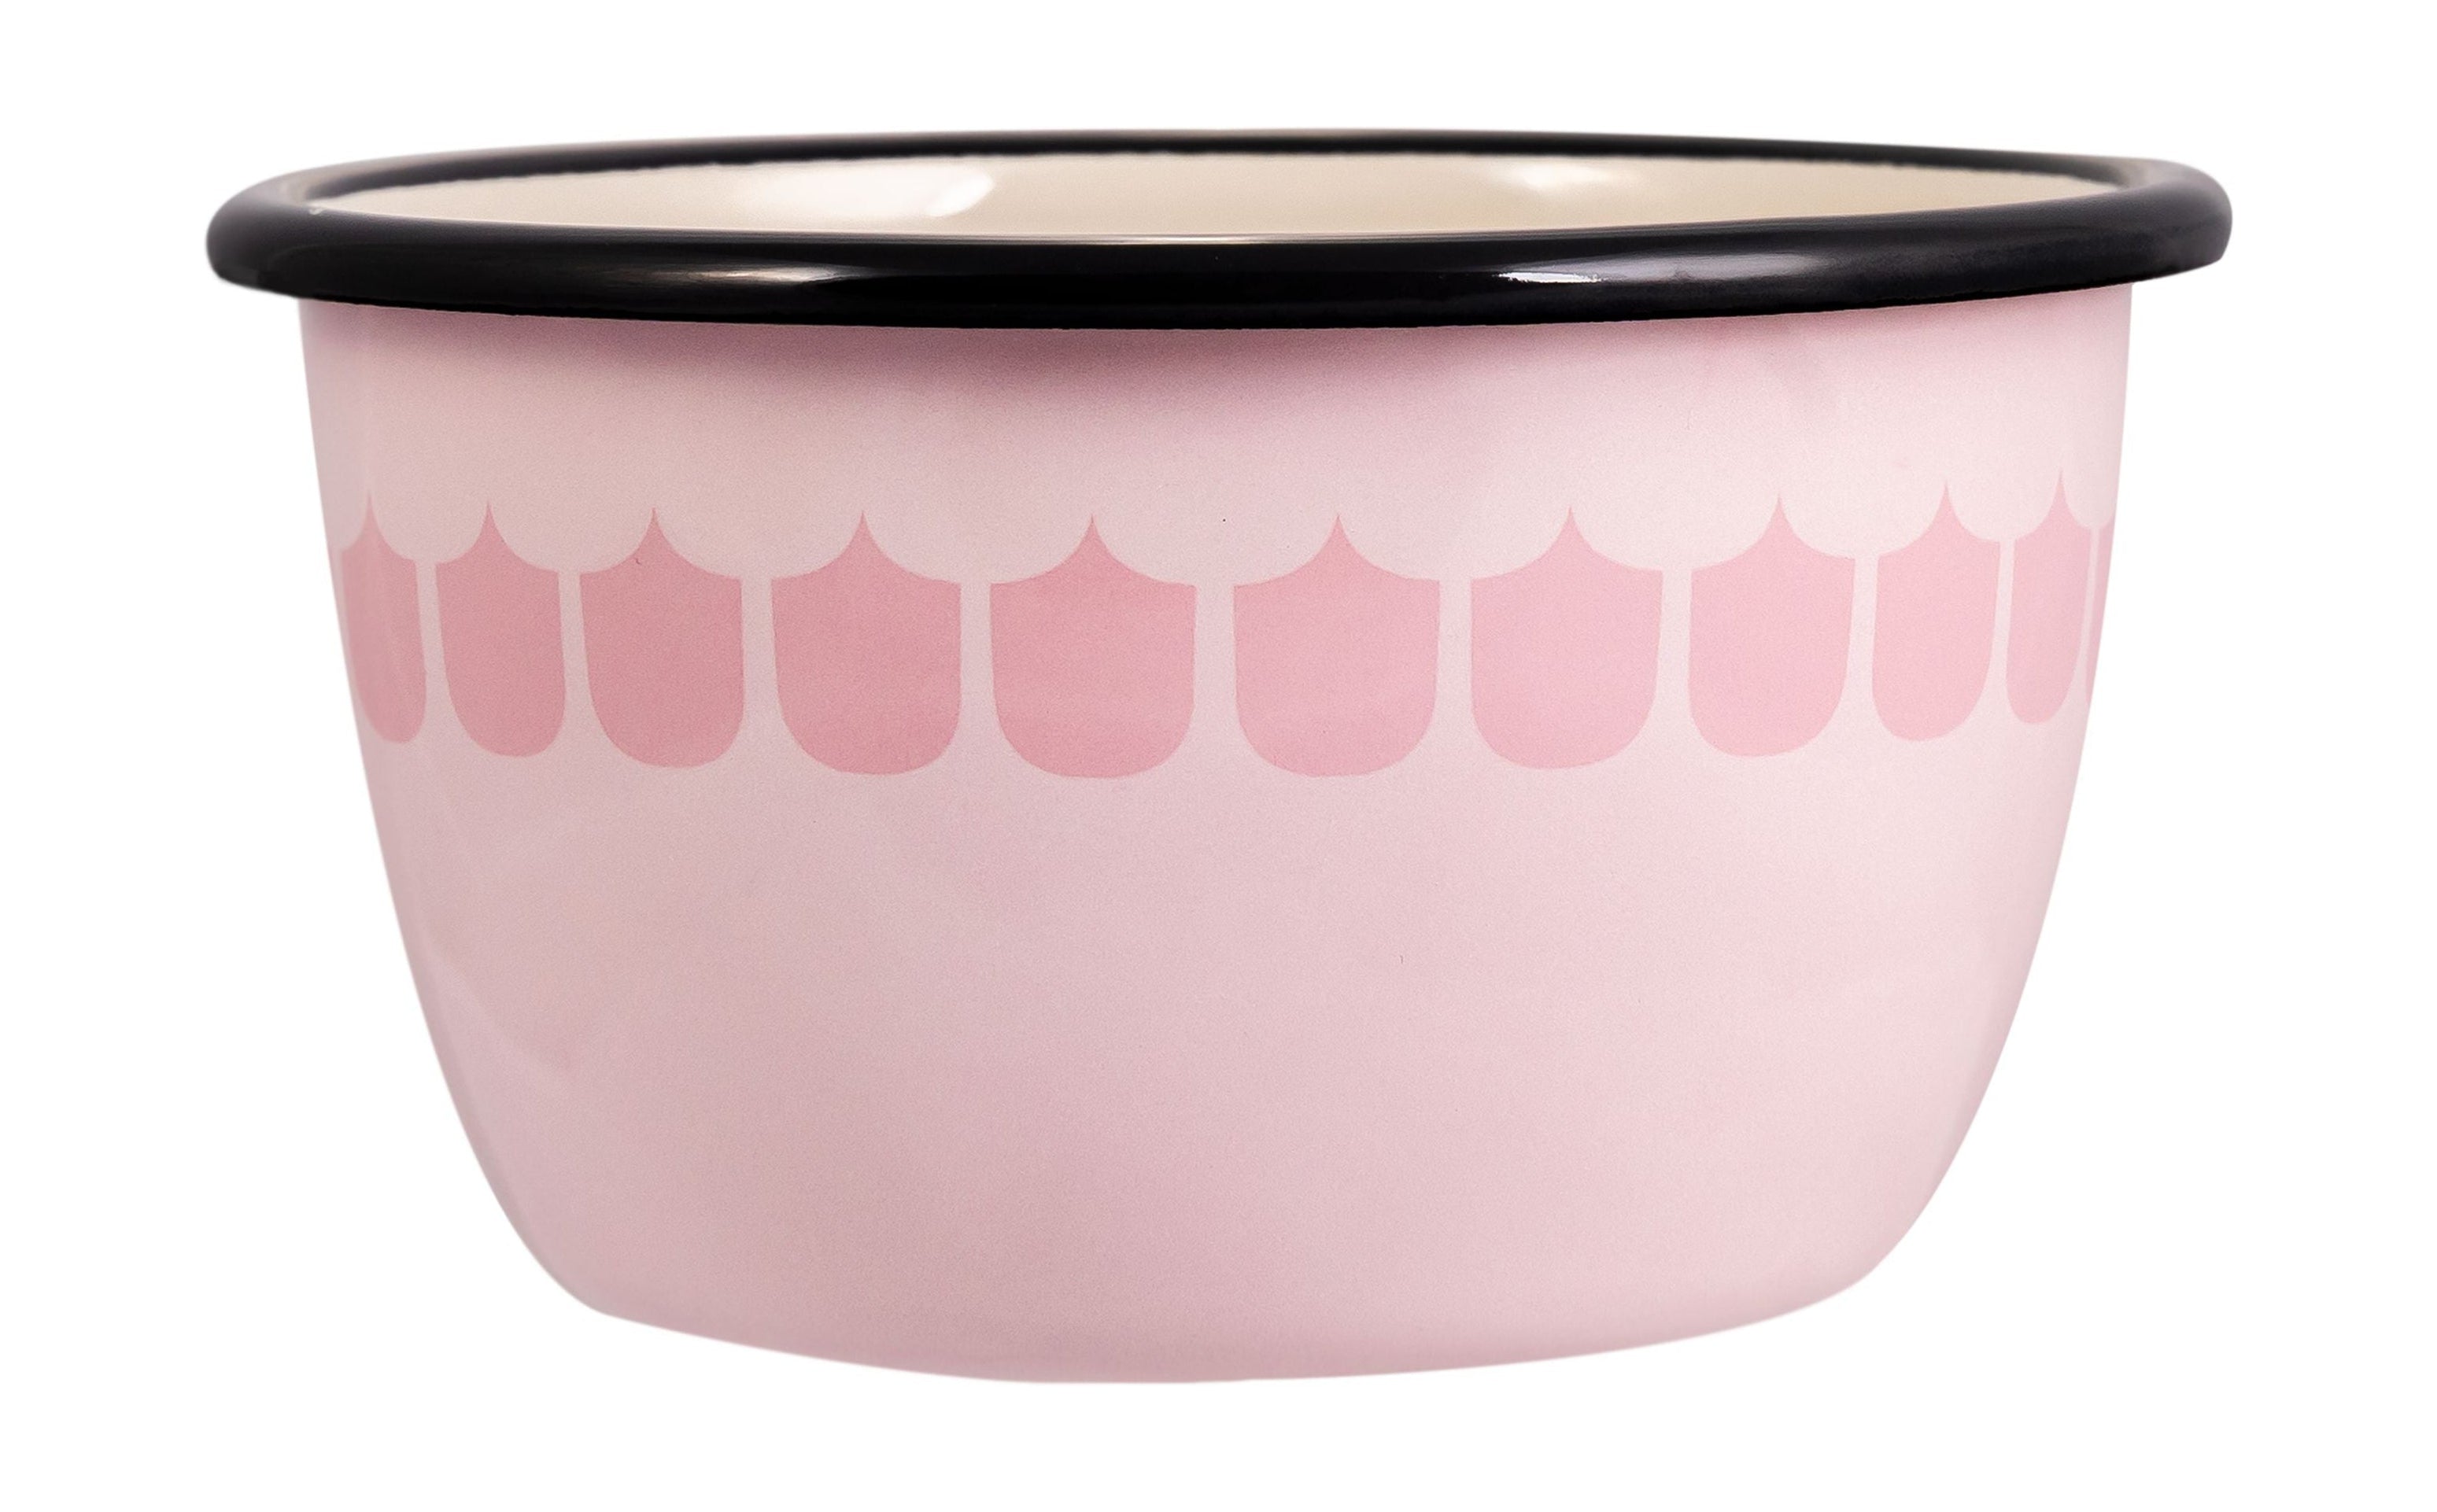 Muurla Vappu Kitchen Emaljel Bowl, Pink